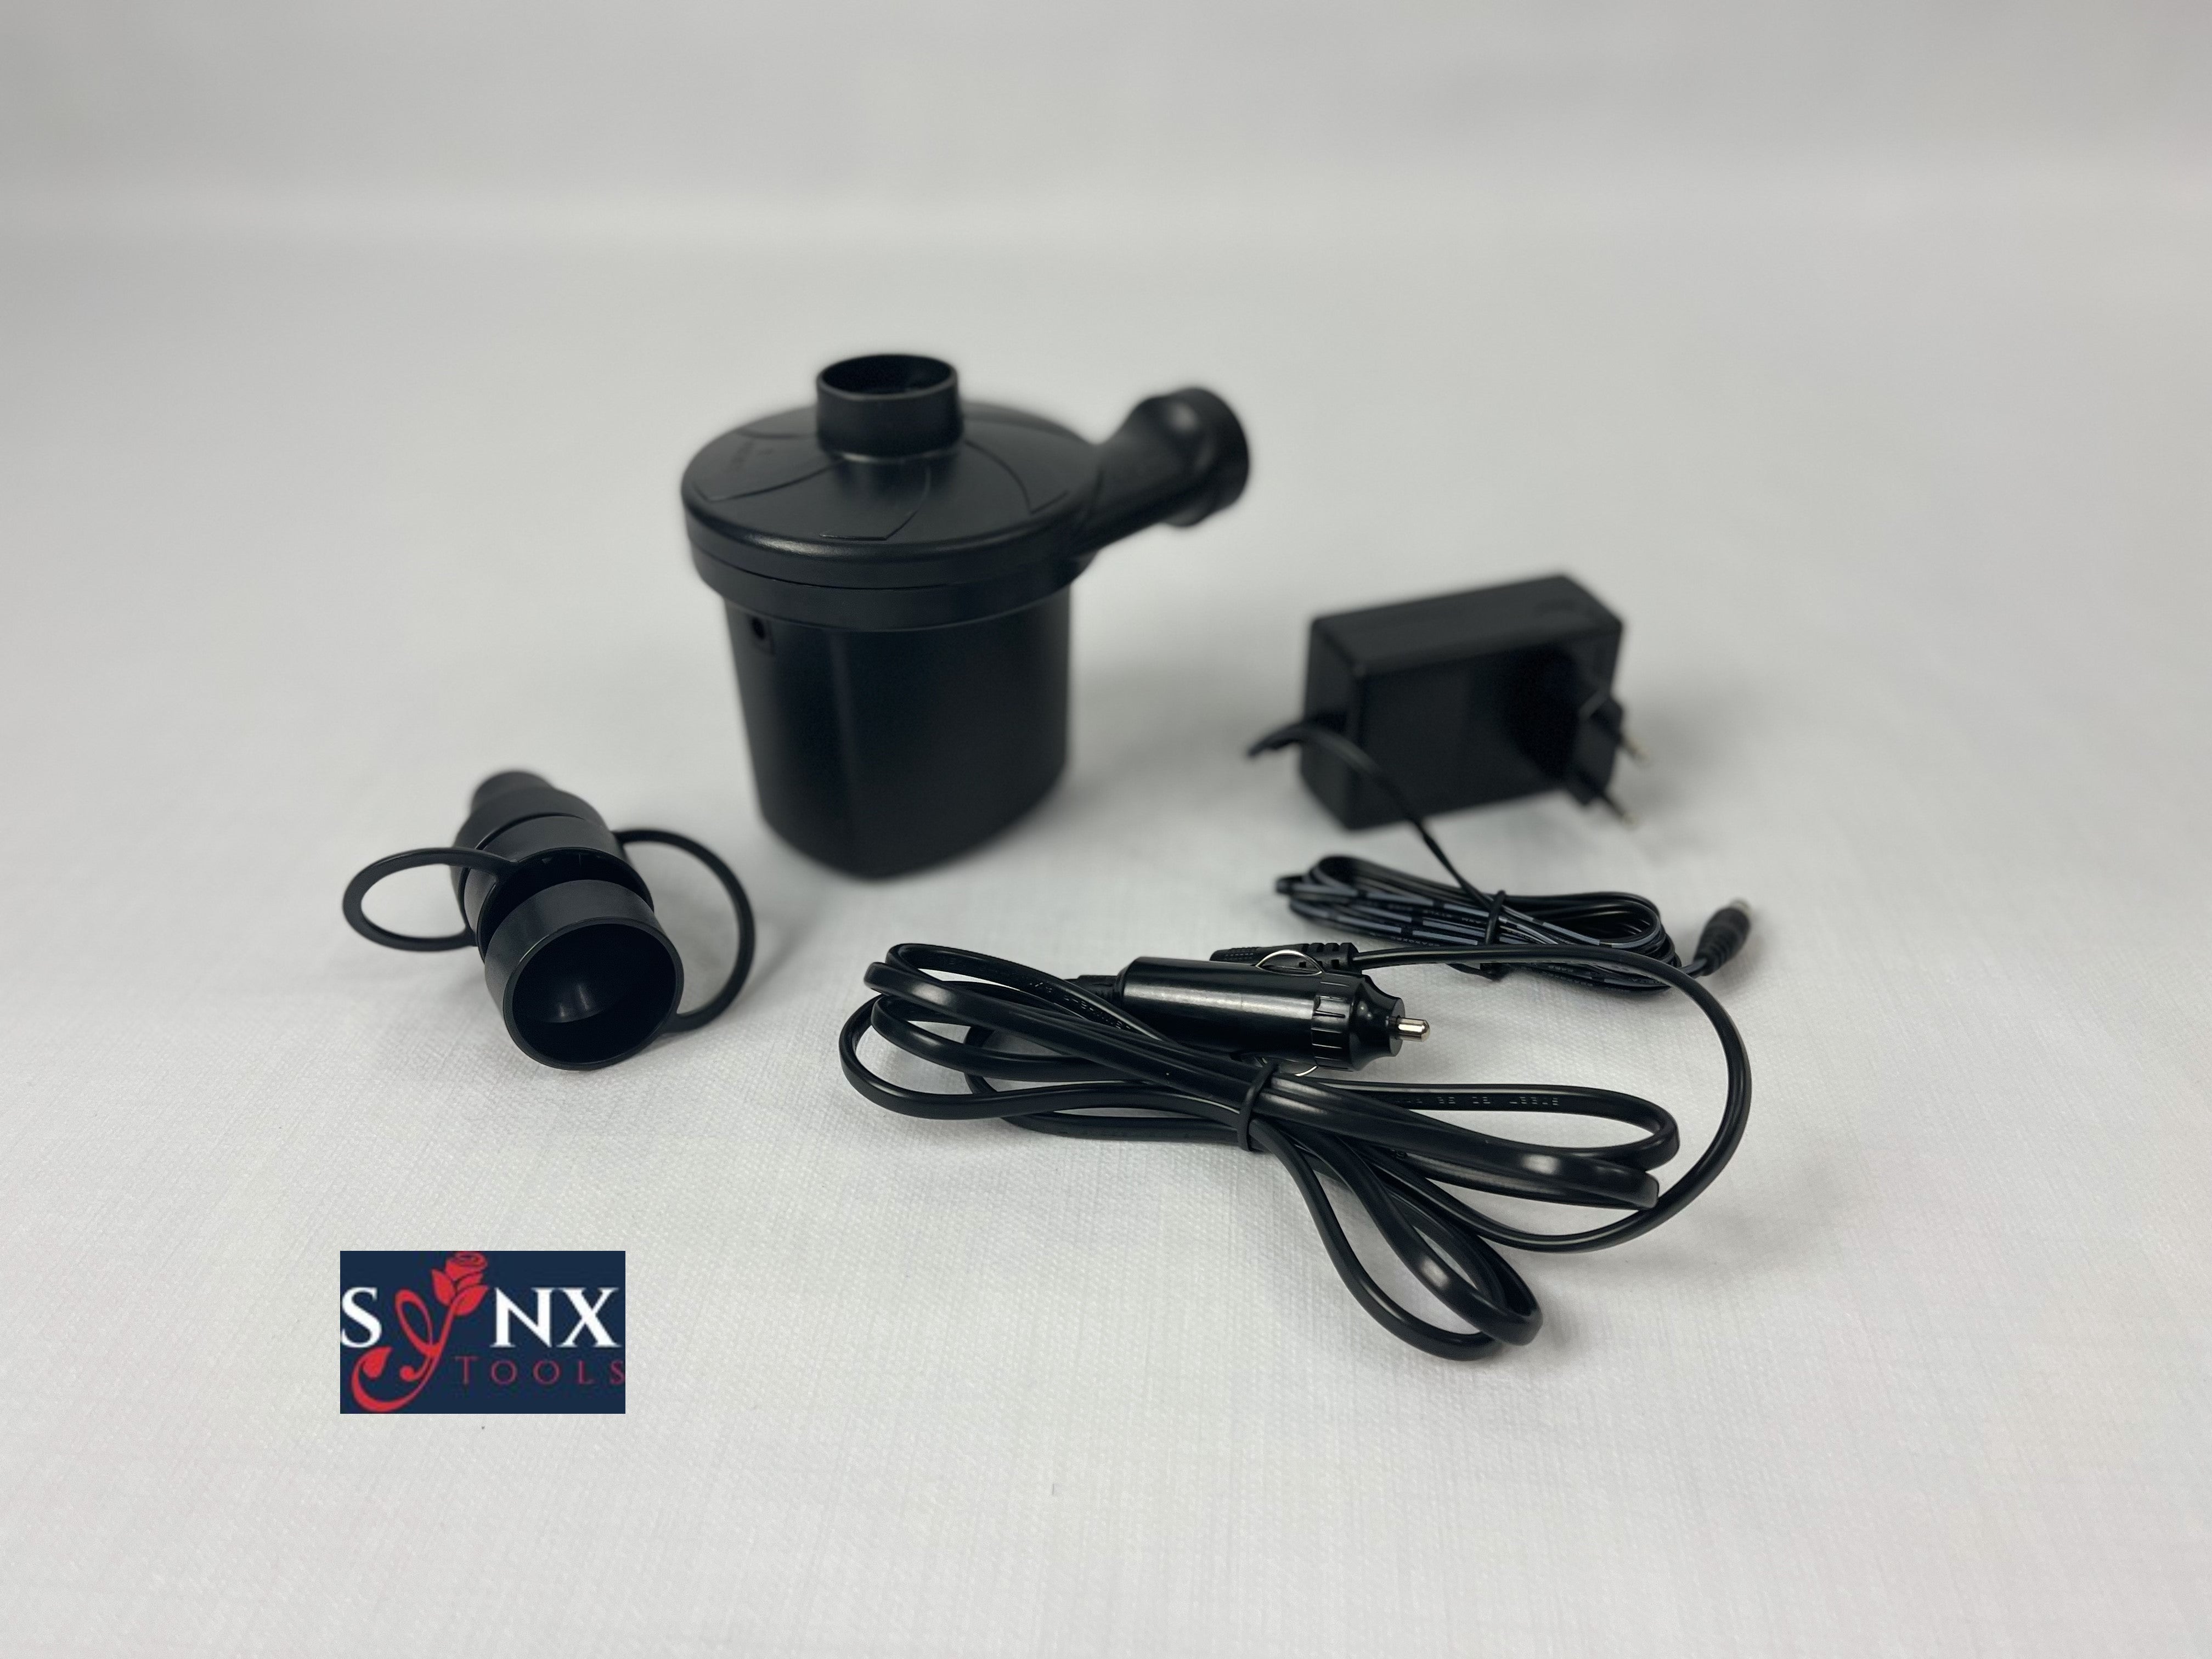 Synx Tools Luftpumpe elektrisch 50 W – 12 V/220 V Camping